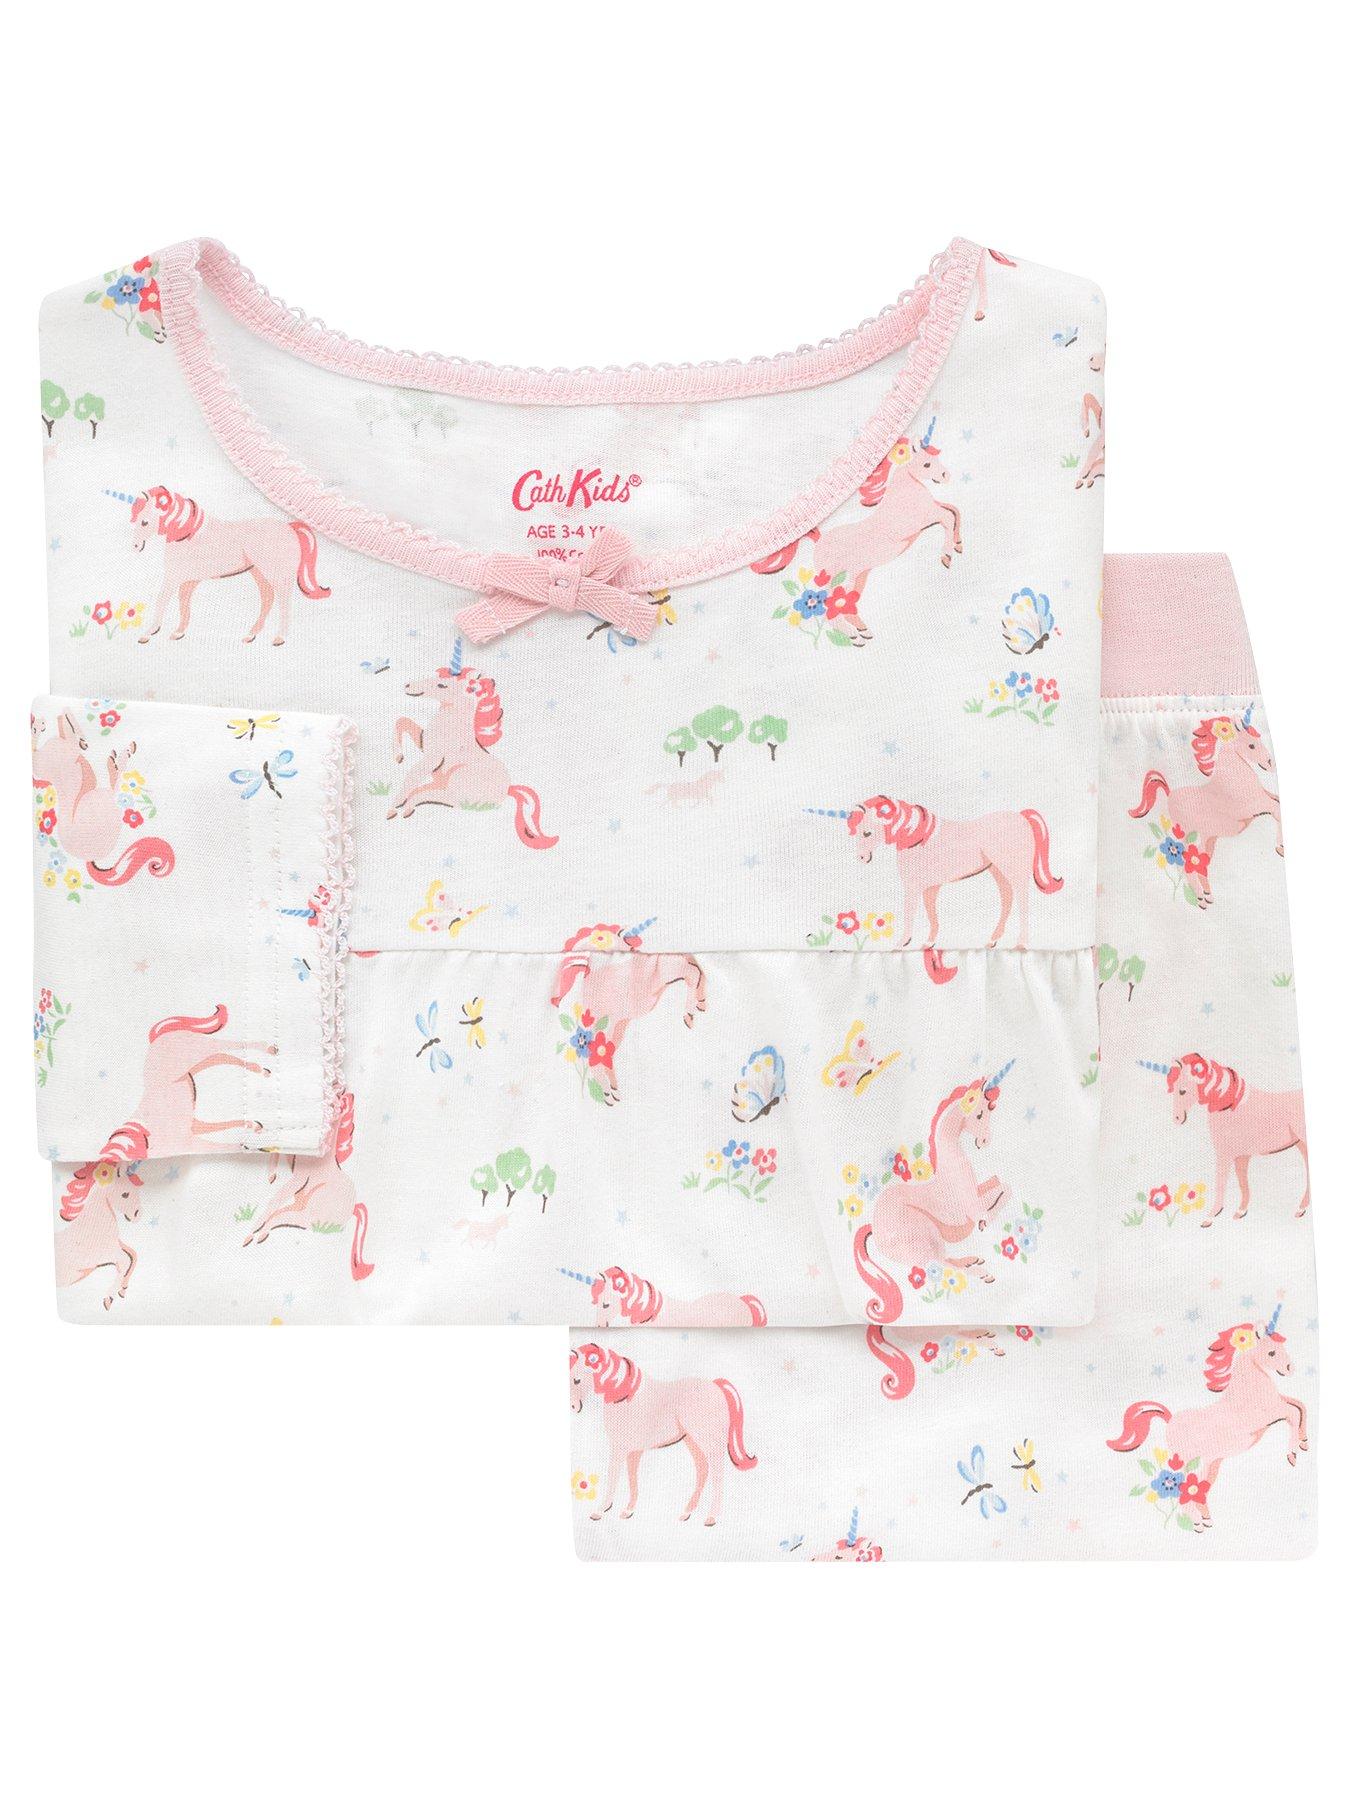 cath kidston children's pyjamas